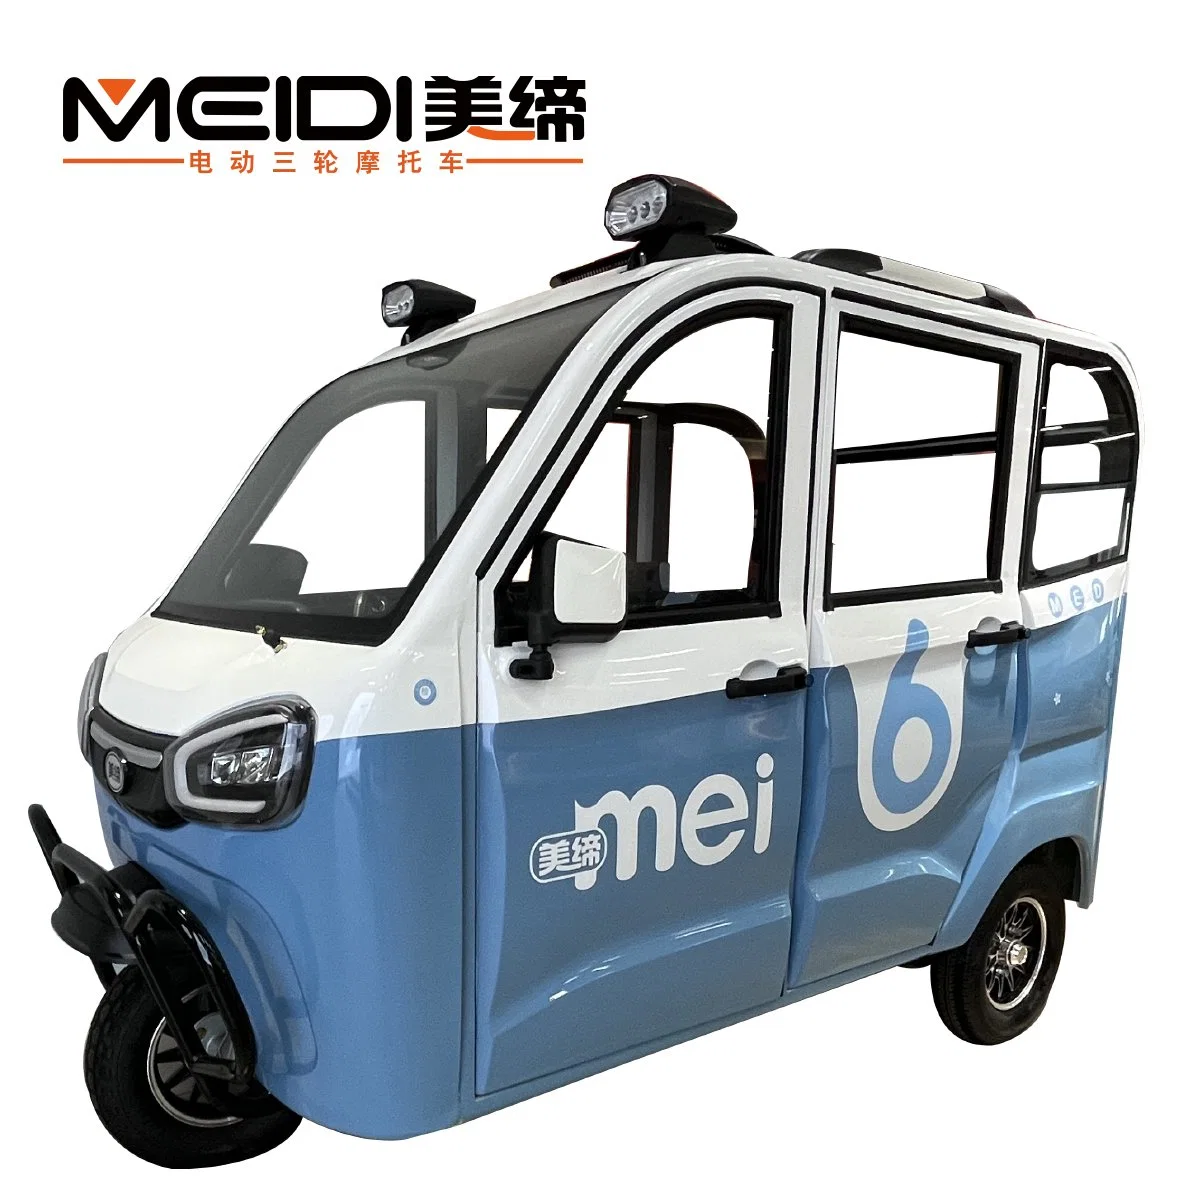 Meidi 1200W 1500W 1800W Solar Auto Rickshaw Auto Battery Operated Closed Electric Tricycle